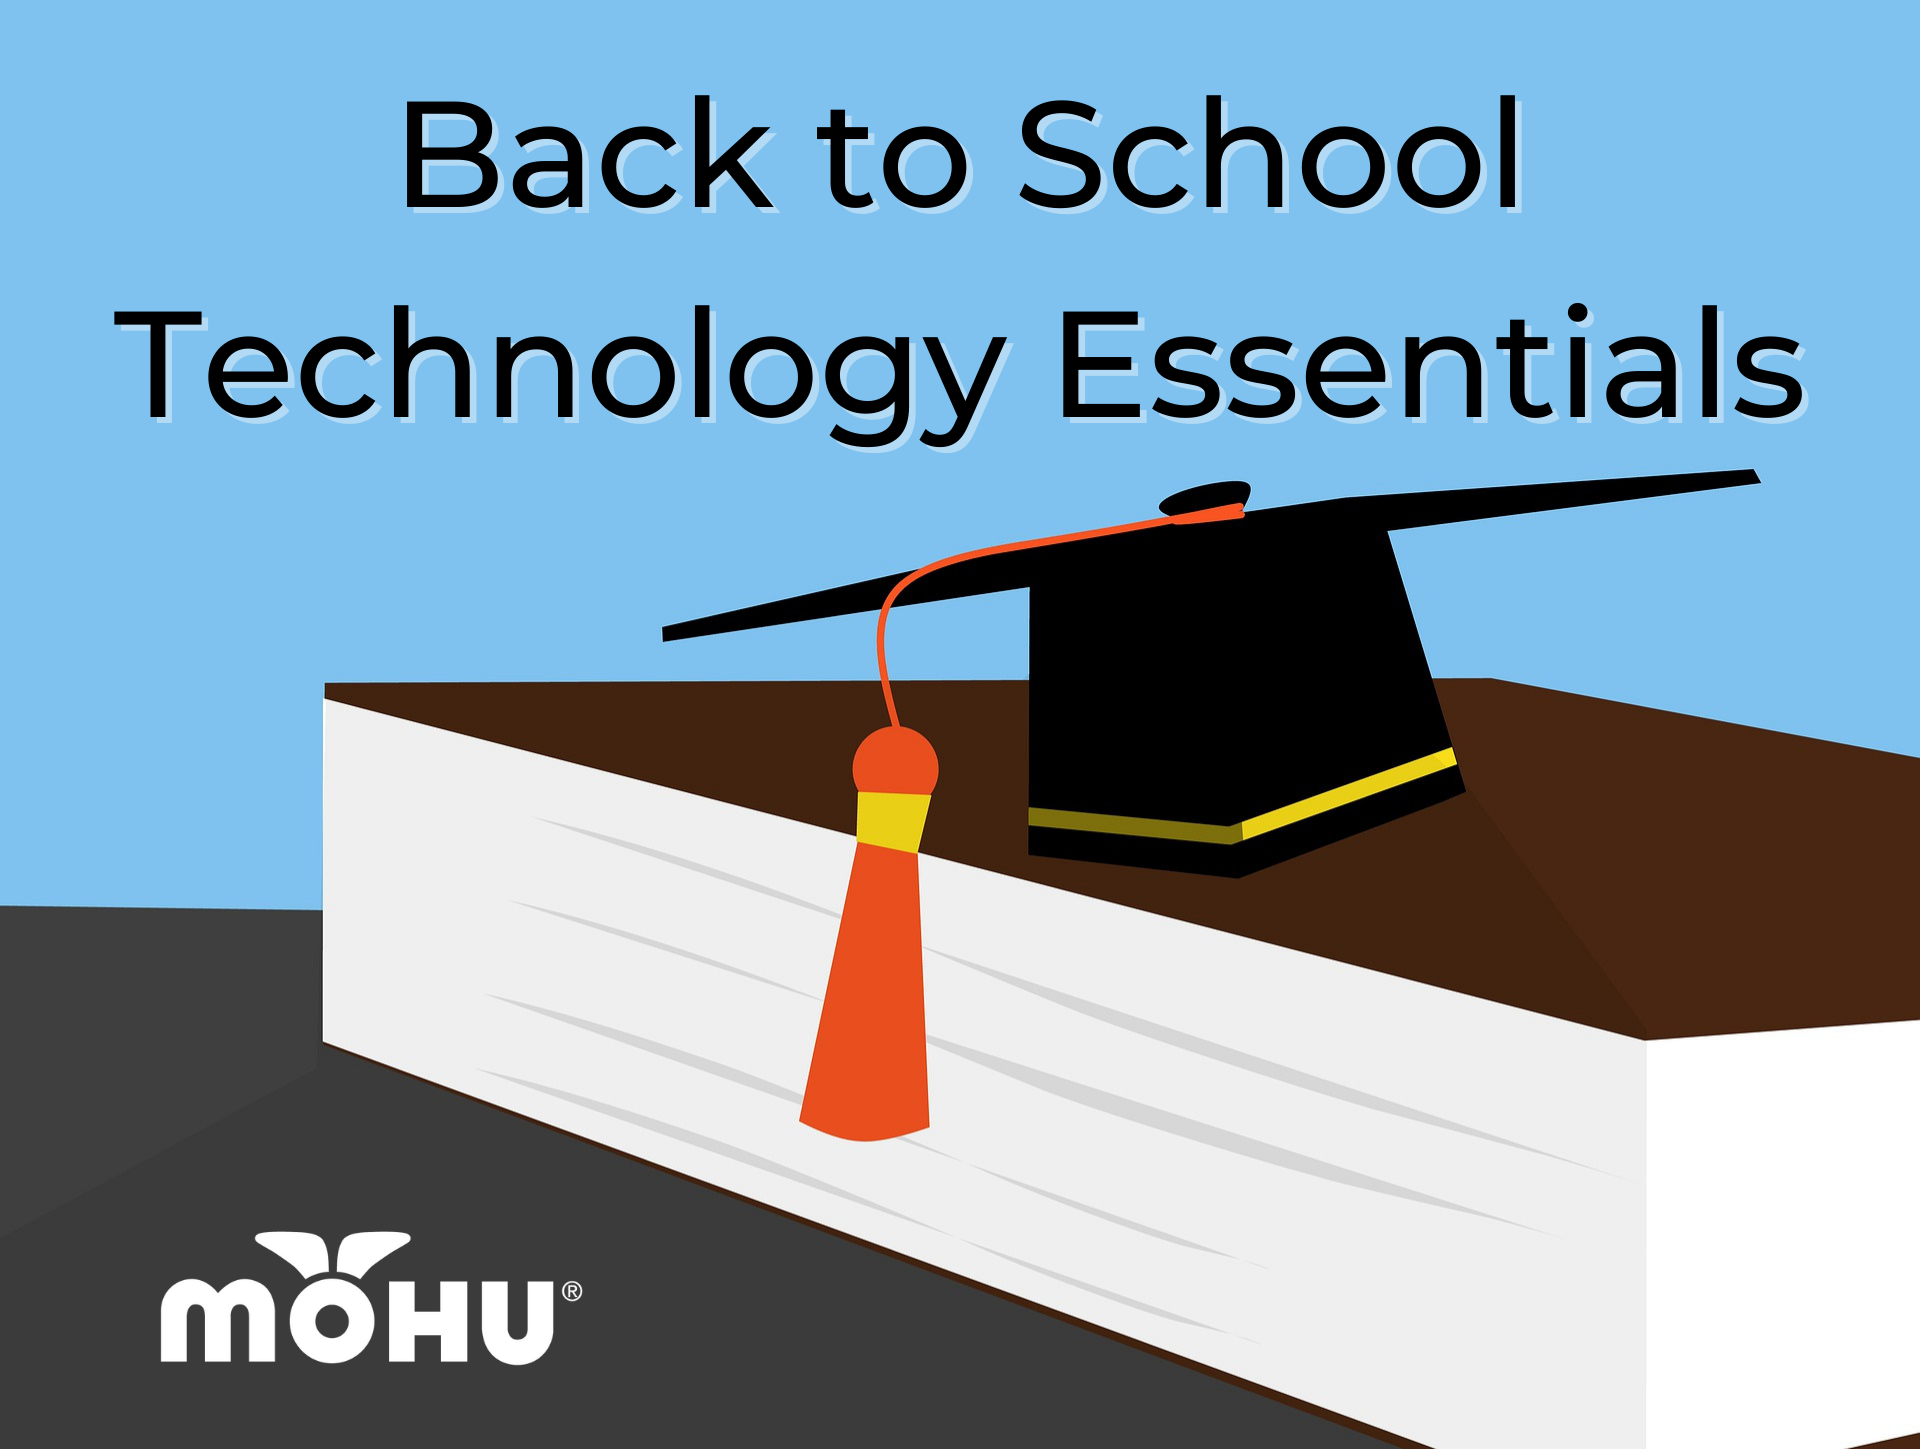 Graduation cap sitting on a book, mohu logo, Back to School Technology Essentials